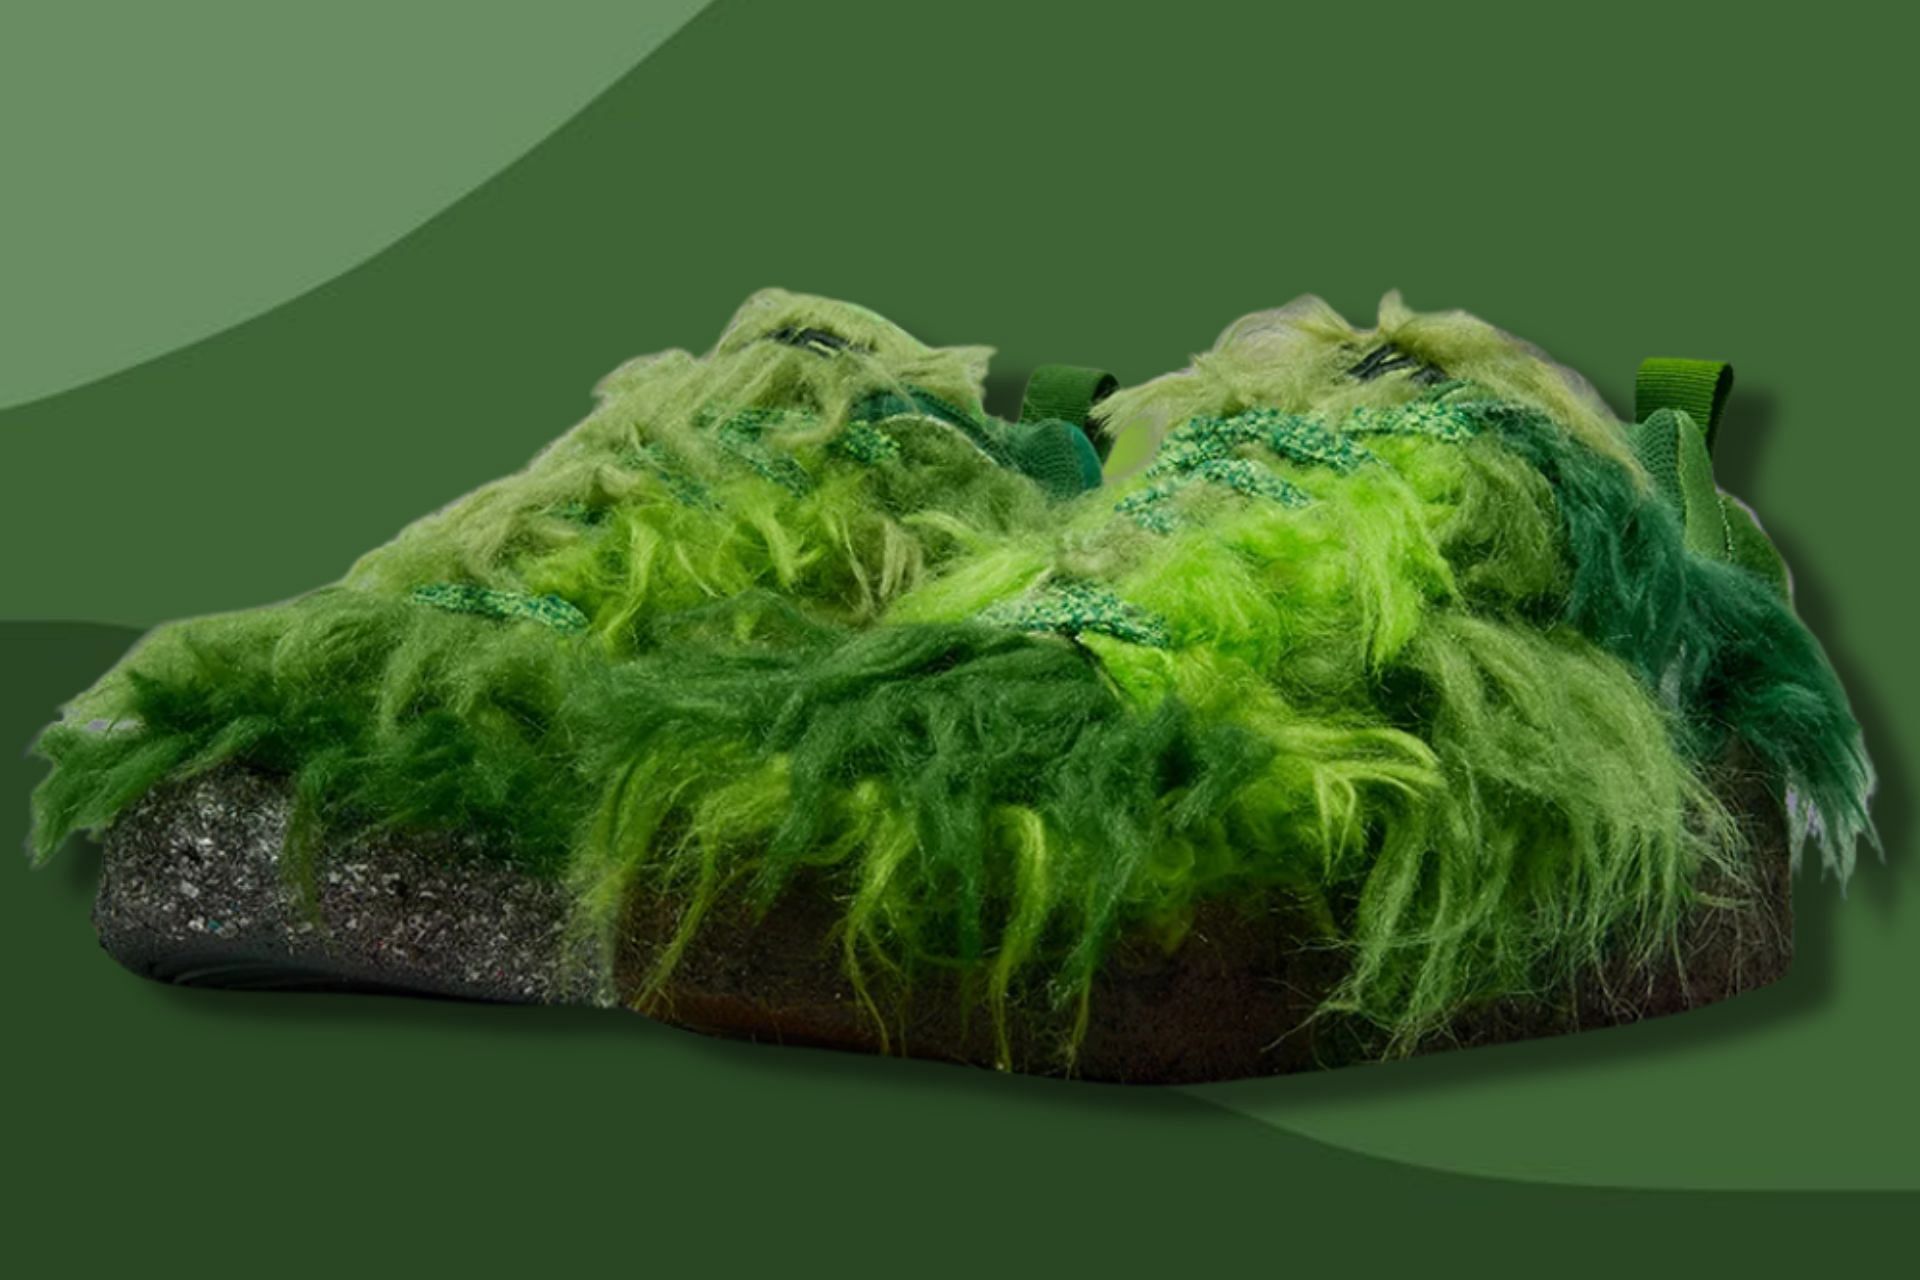 Cactus Plant Flea Market x Nike Dunk Low Grinch Green shoes (Image via Twitter/@houseofheat)